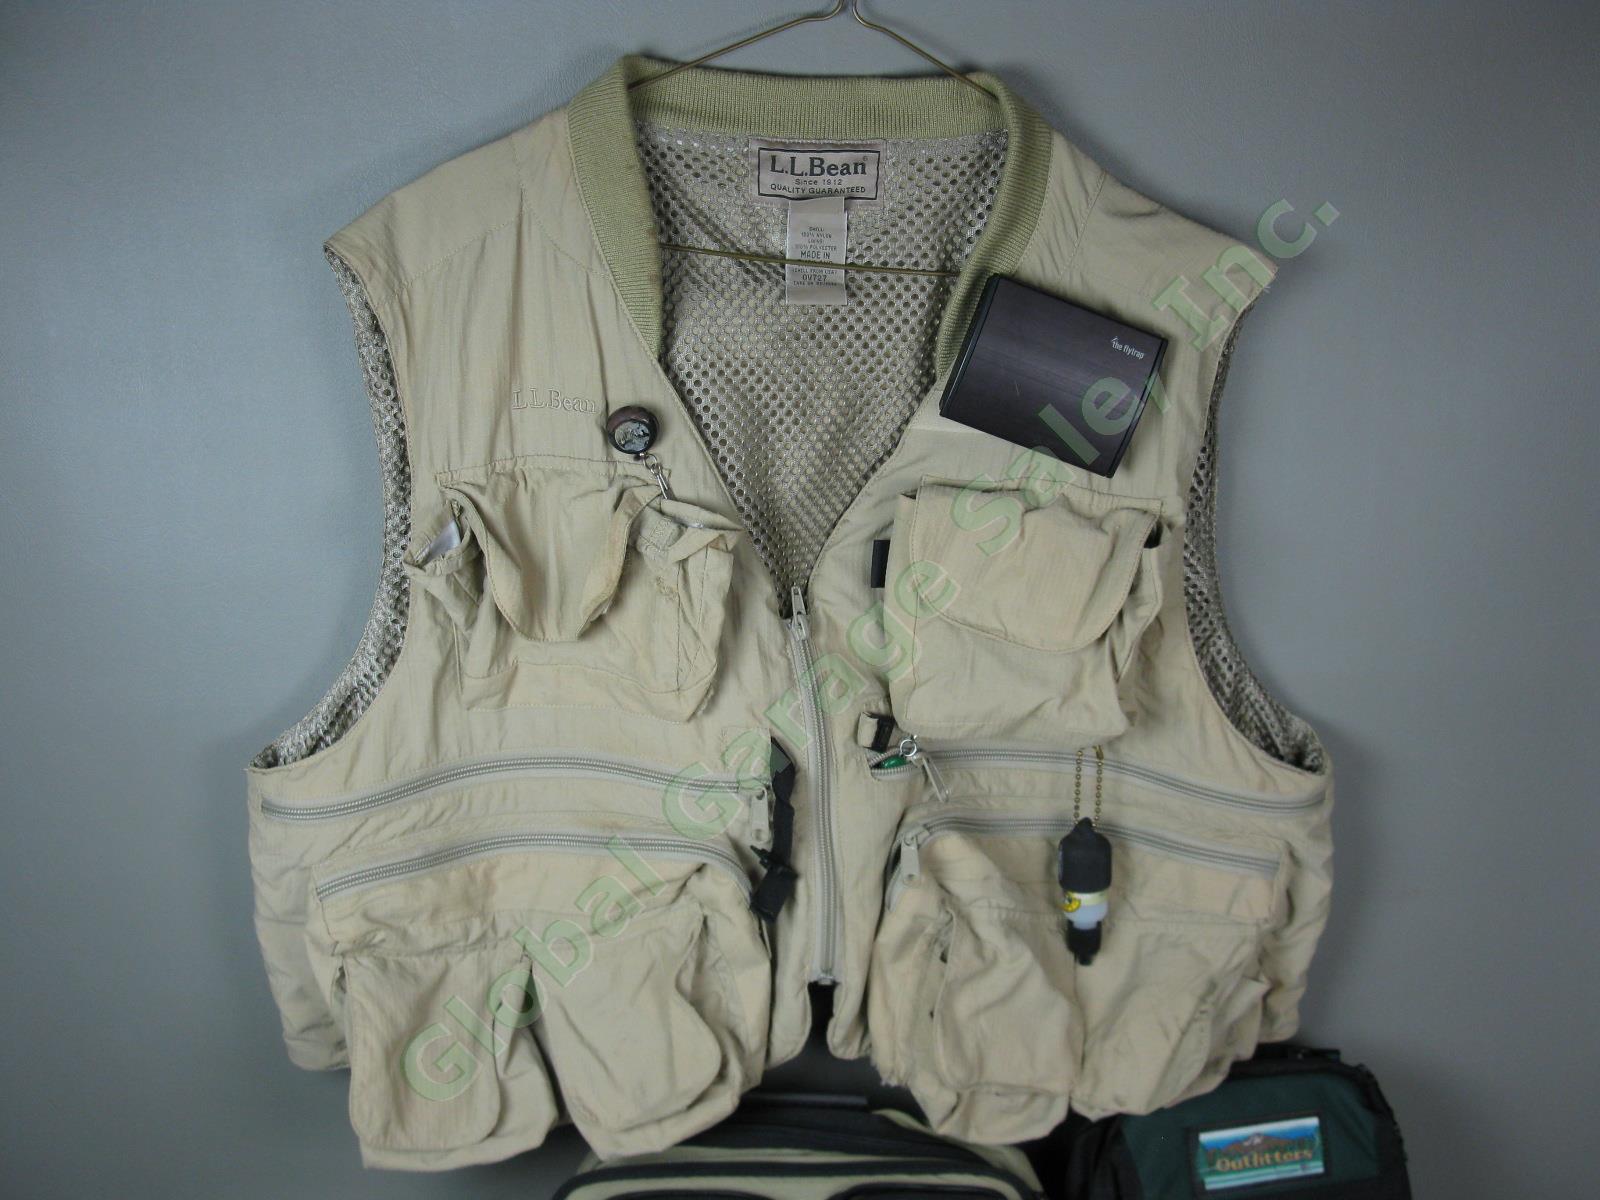 Huge Fly Fishing Gear Lot LL Bean Vest Orvis Cases Line New Bags Books Cabelas + 1